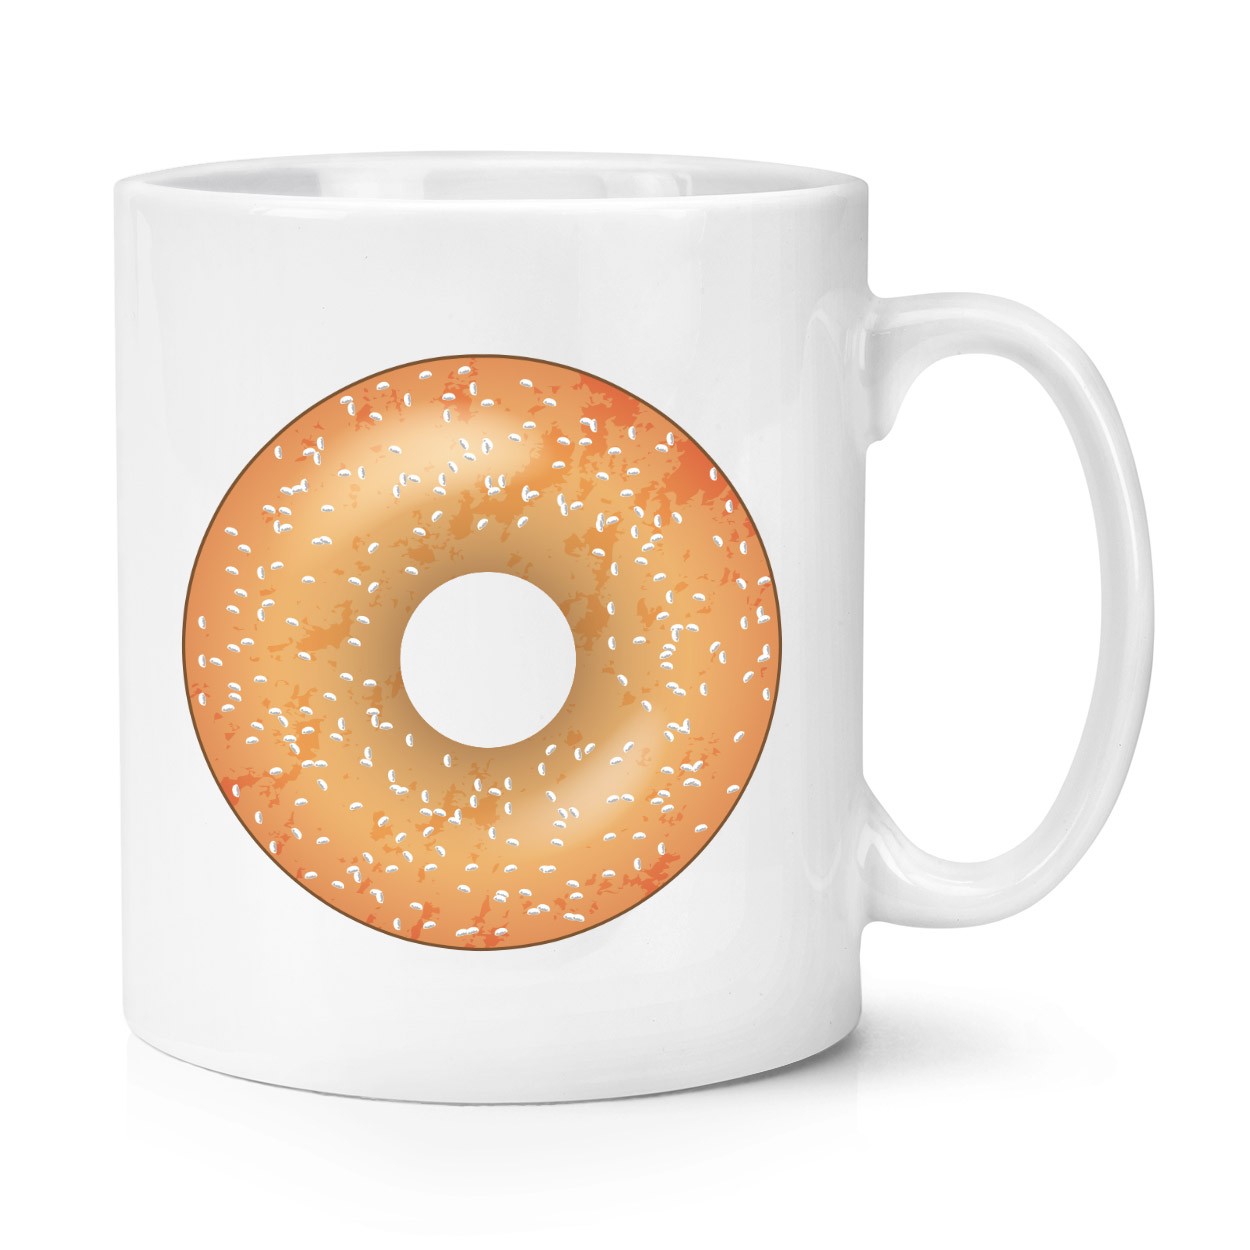 Sprinkled Glazed Doughnut Donut 10oz Mug Cup